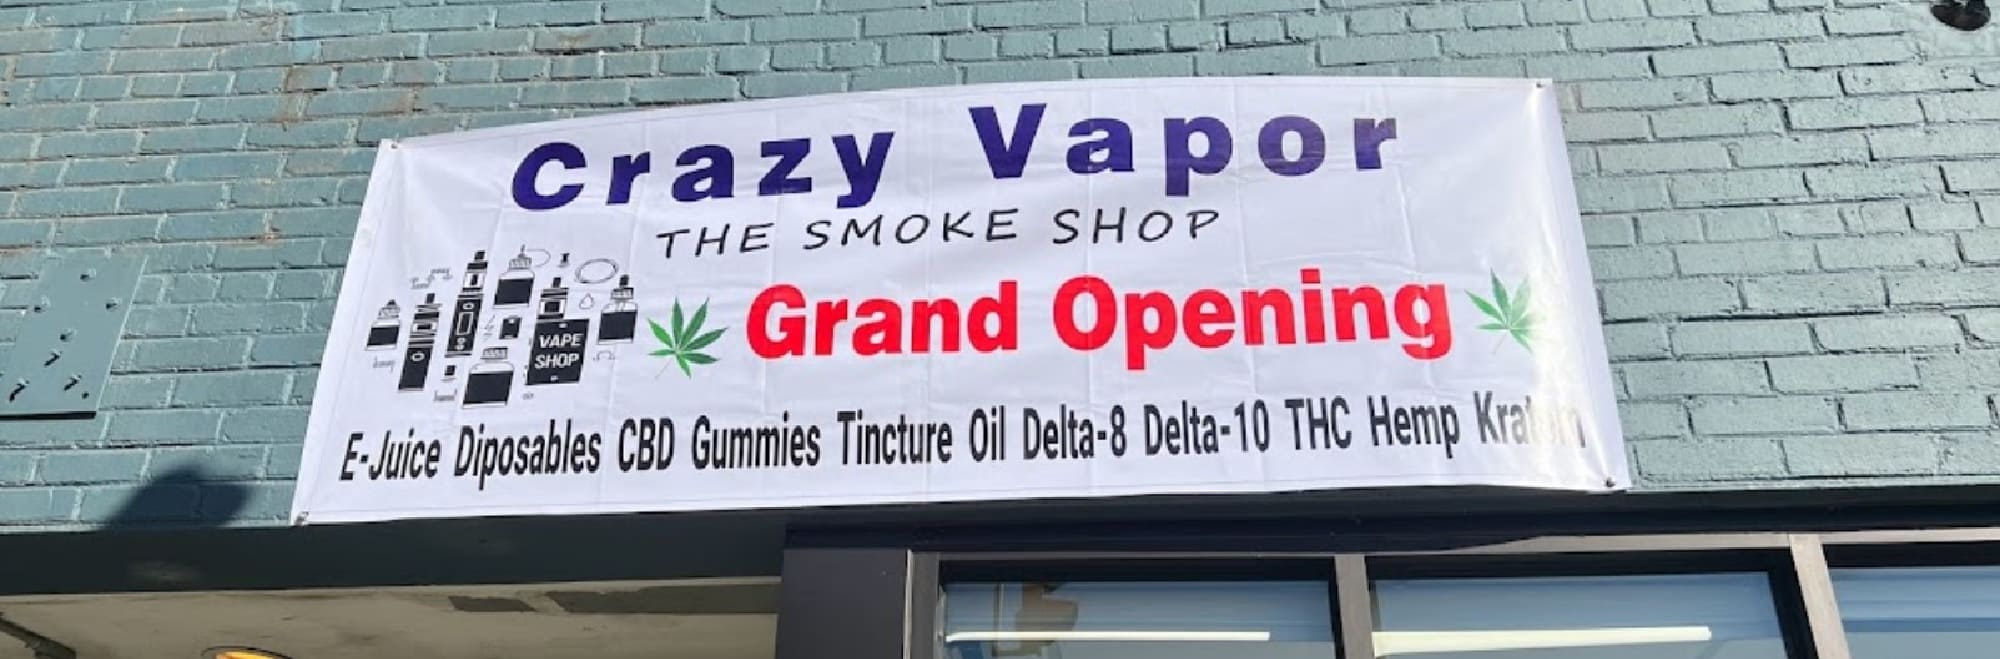 image of crazy vapor smoke shop in richmond va